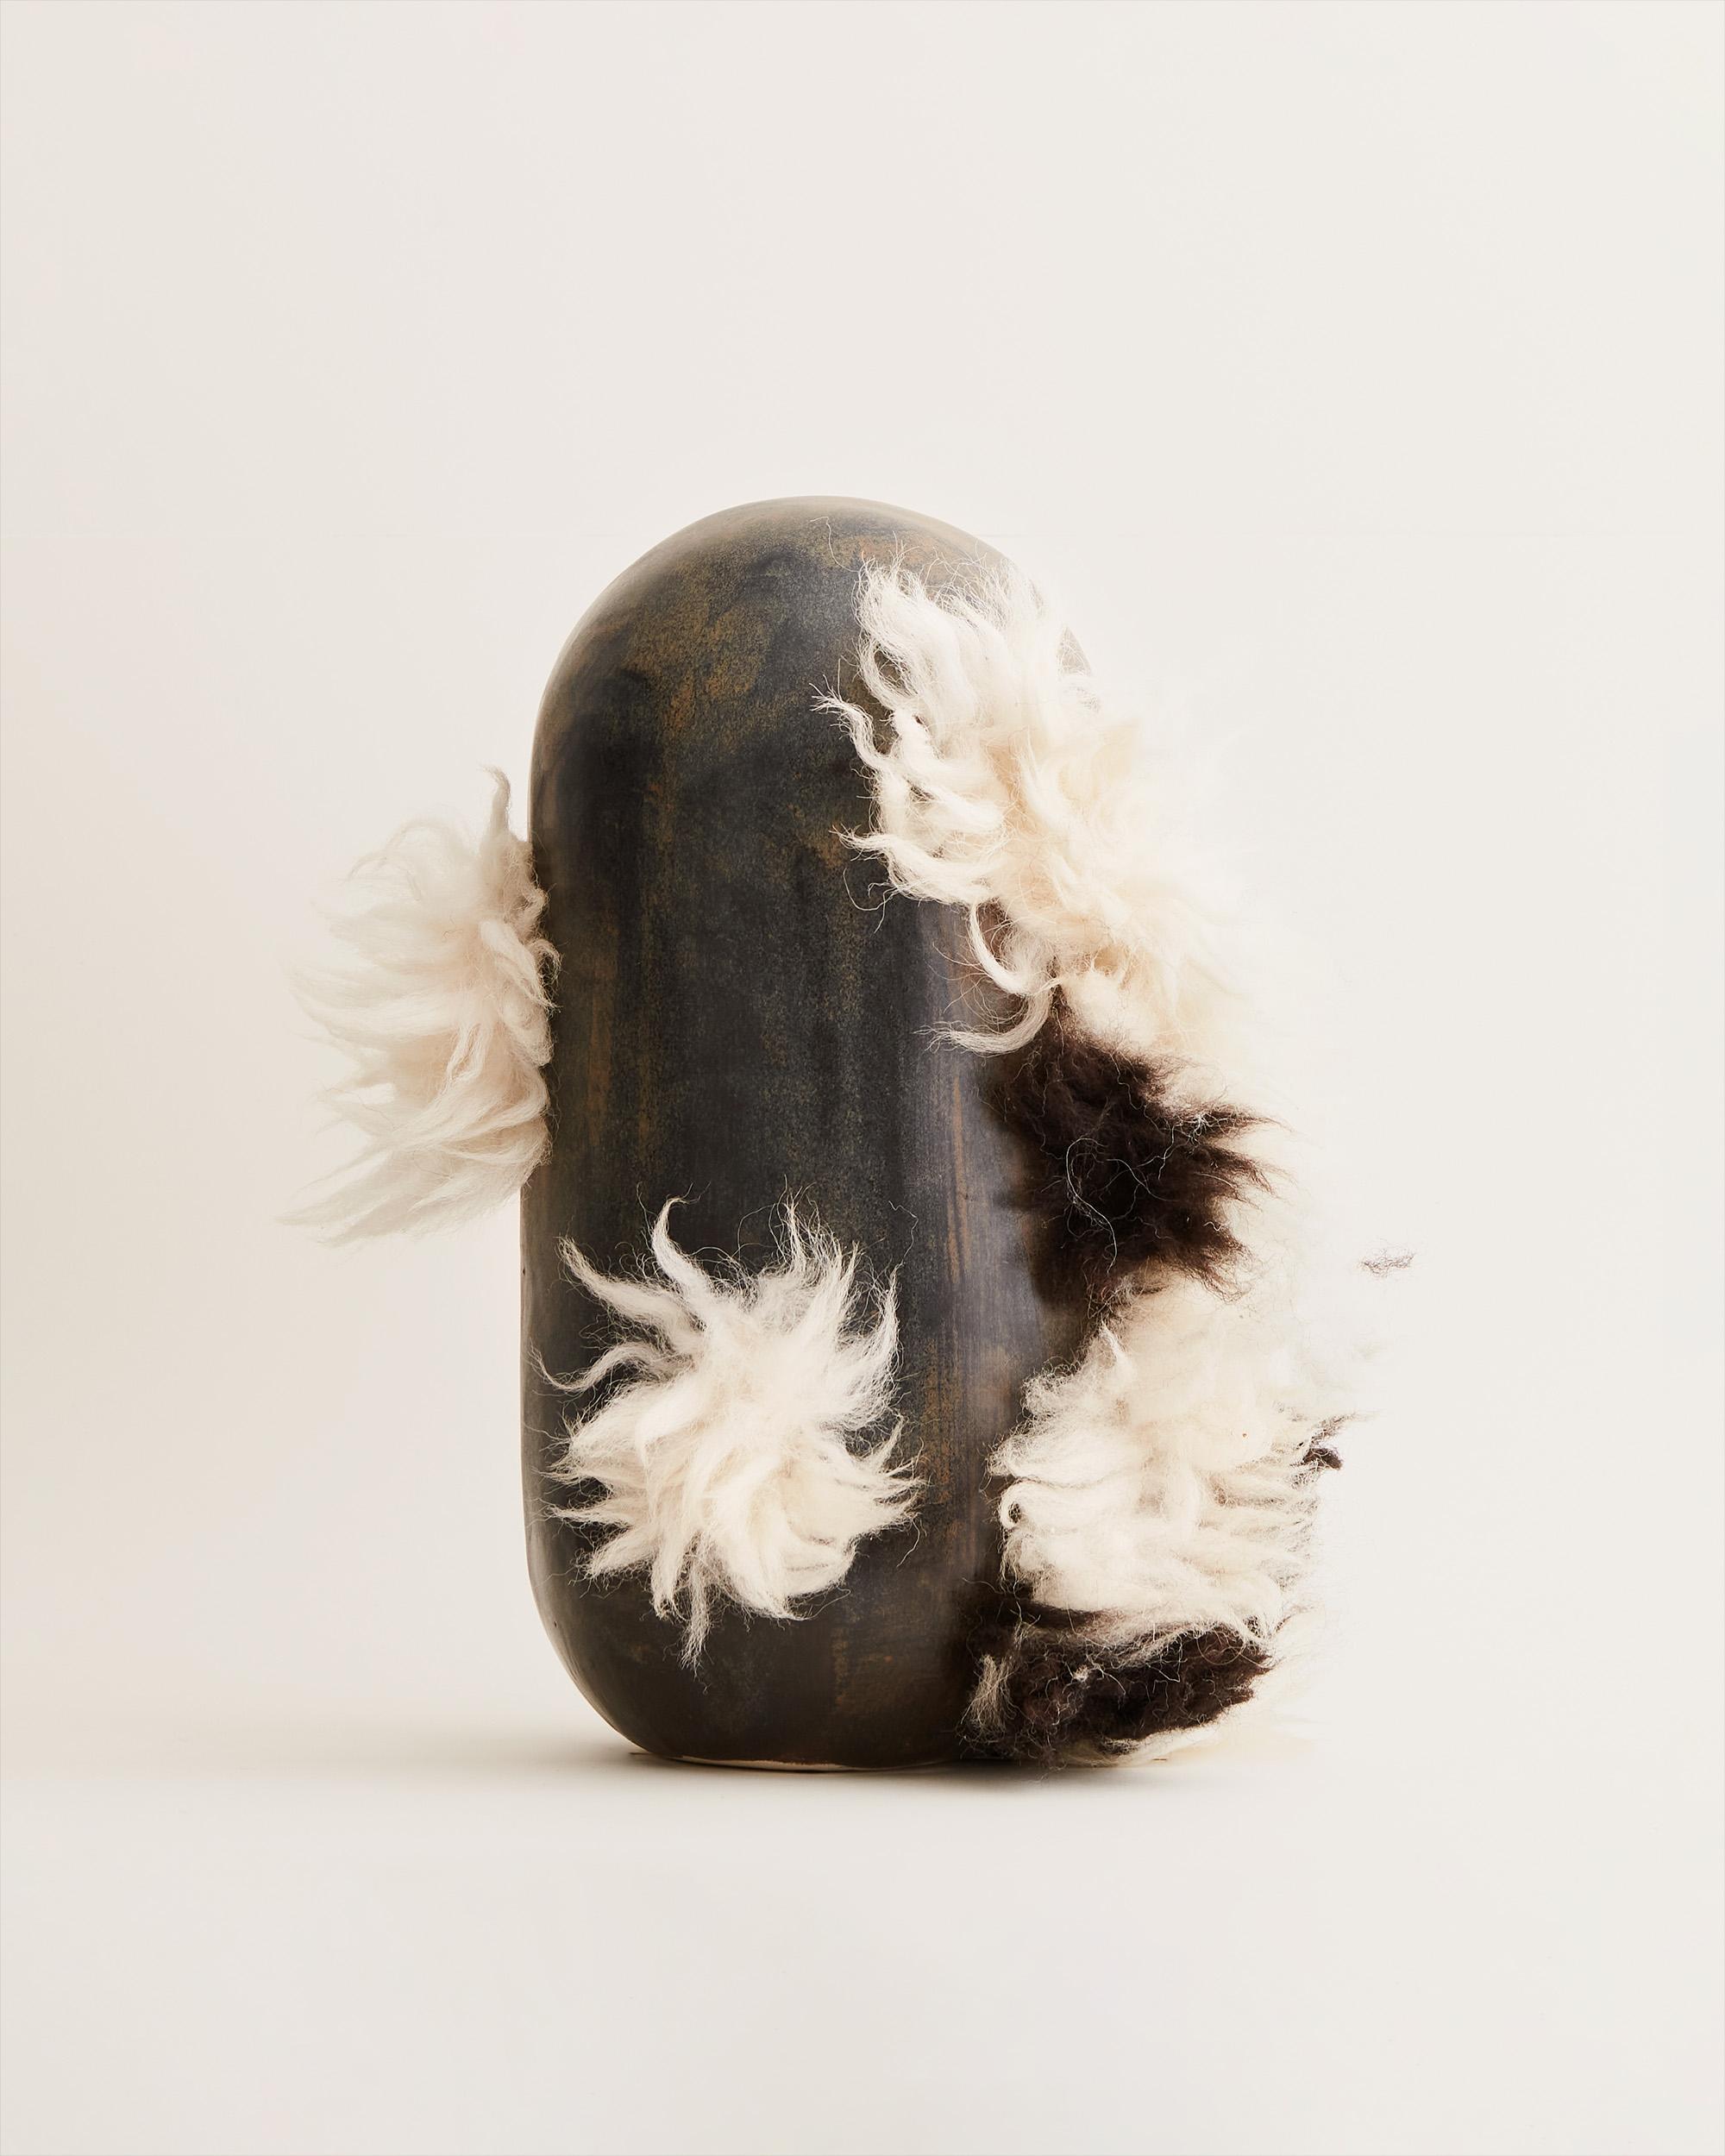 Angélique de Chabot Abstract Sculpture – Momo Tetis – zeitgenössische abstrakte Keramik mit Pelzskulptur